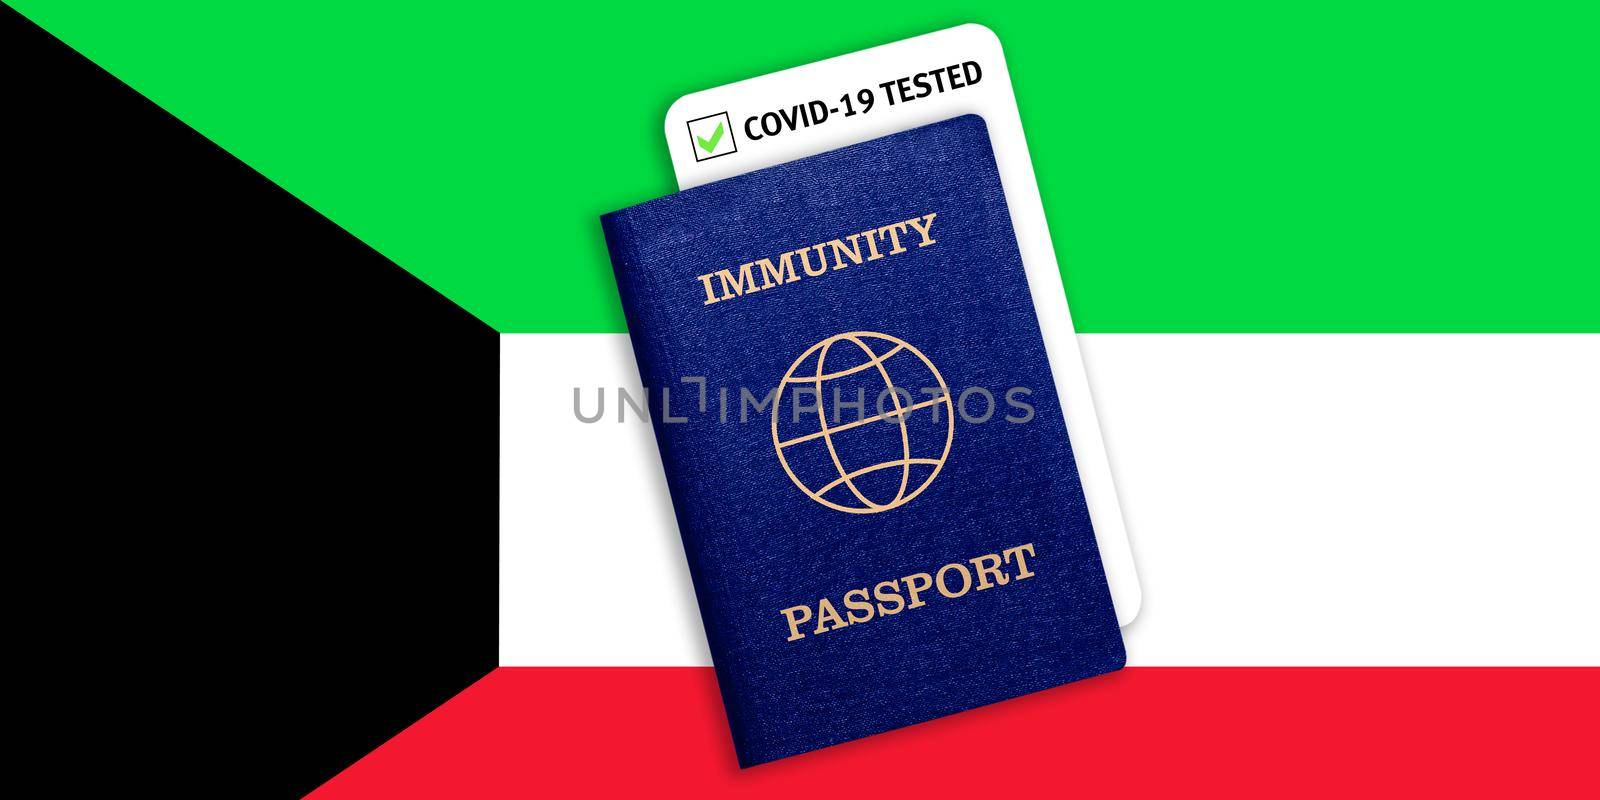 Immunity passport and test result for COVID-19 on flag of Kuwait by galinasharapova